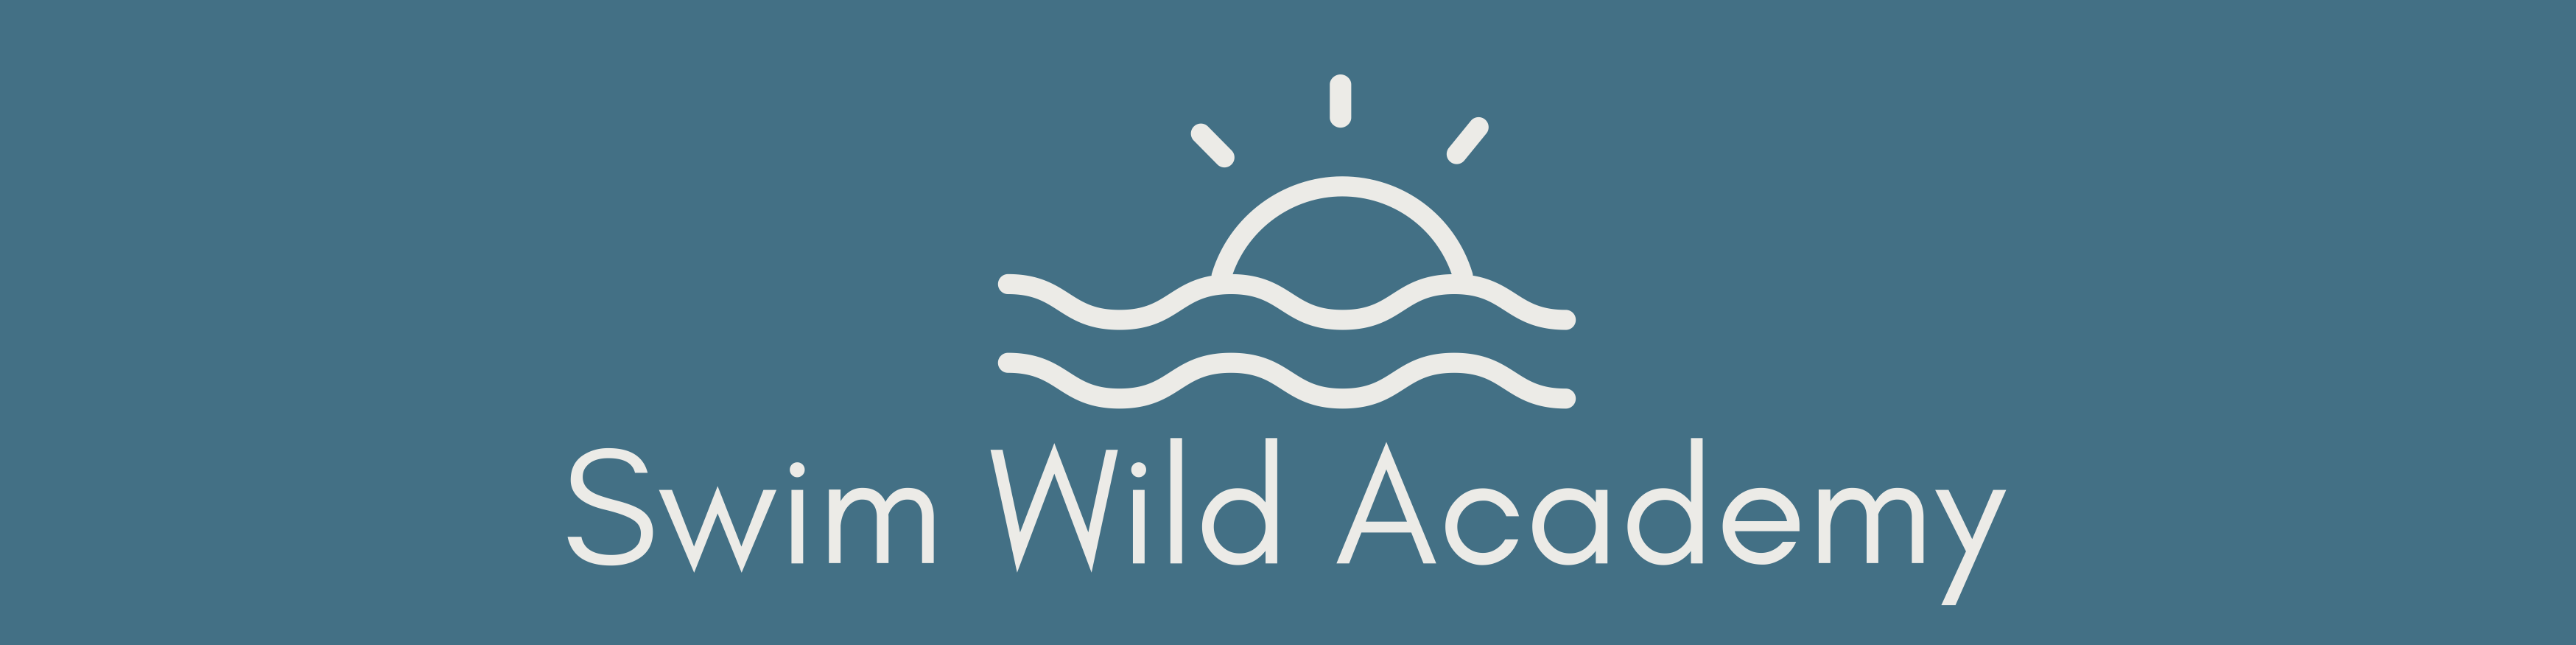 Swim Wild Academy - Swimming lessons